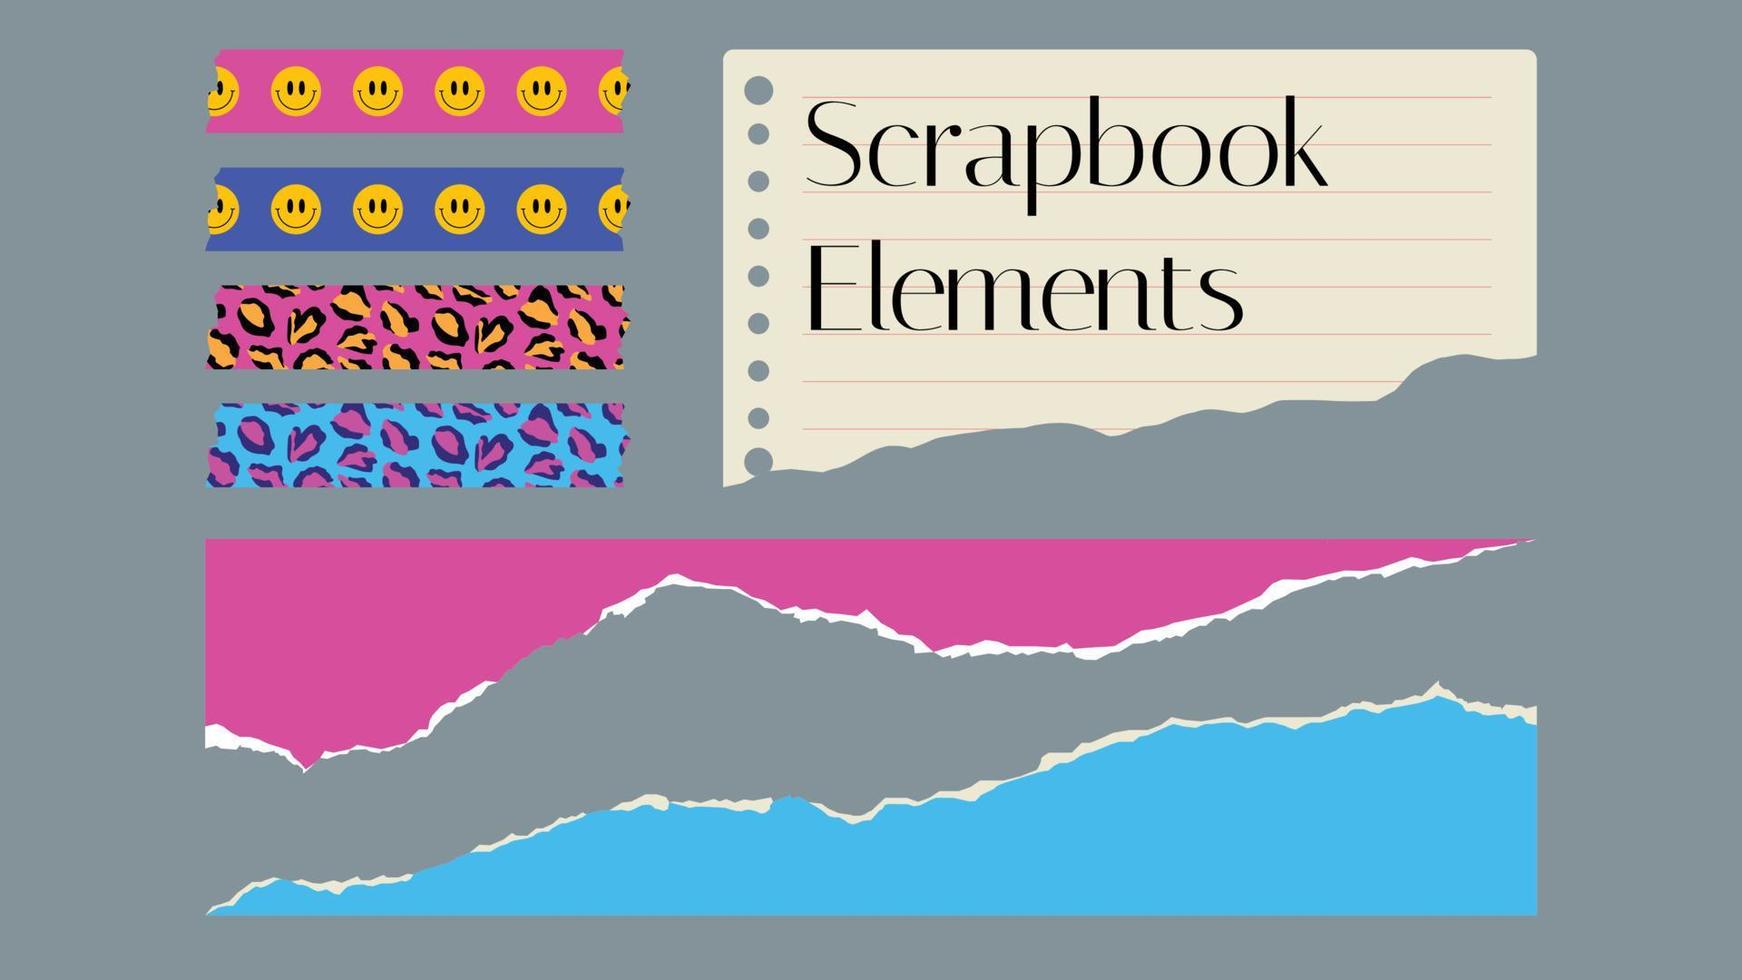 Scrapbook Assets Design Elements vector